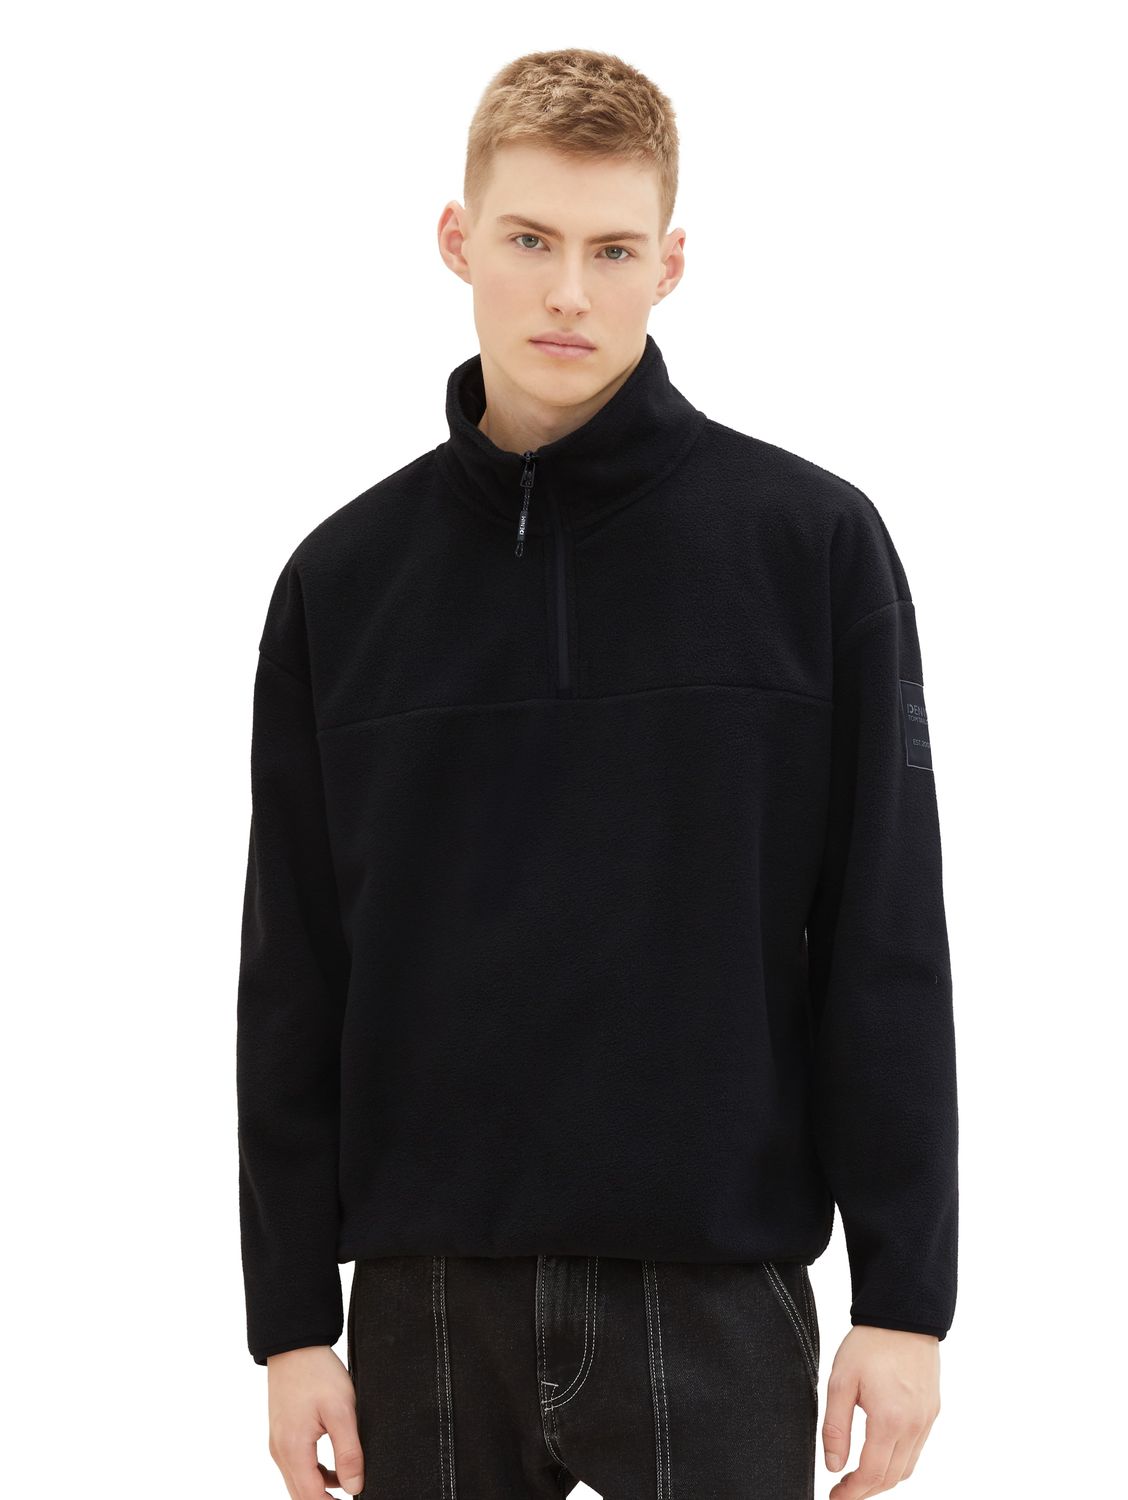 Пуловер TOM TAILOR Denim FLEECE SWEAT, черный пуловер tom tailor denim fleece sweat бежевый